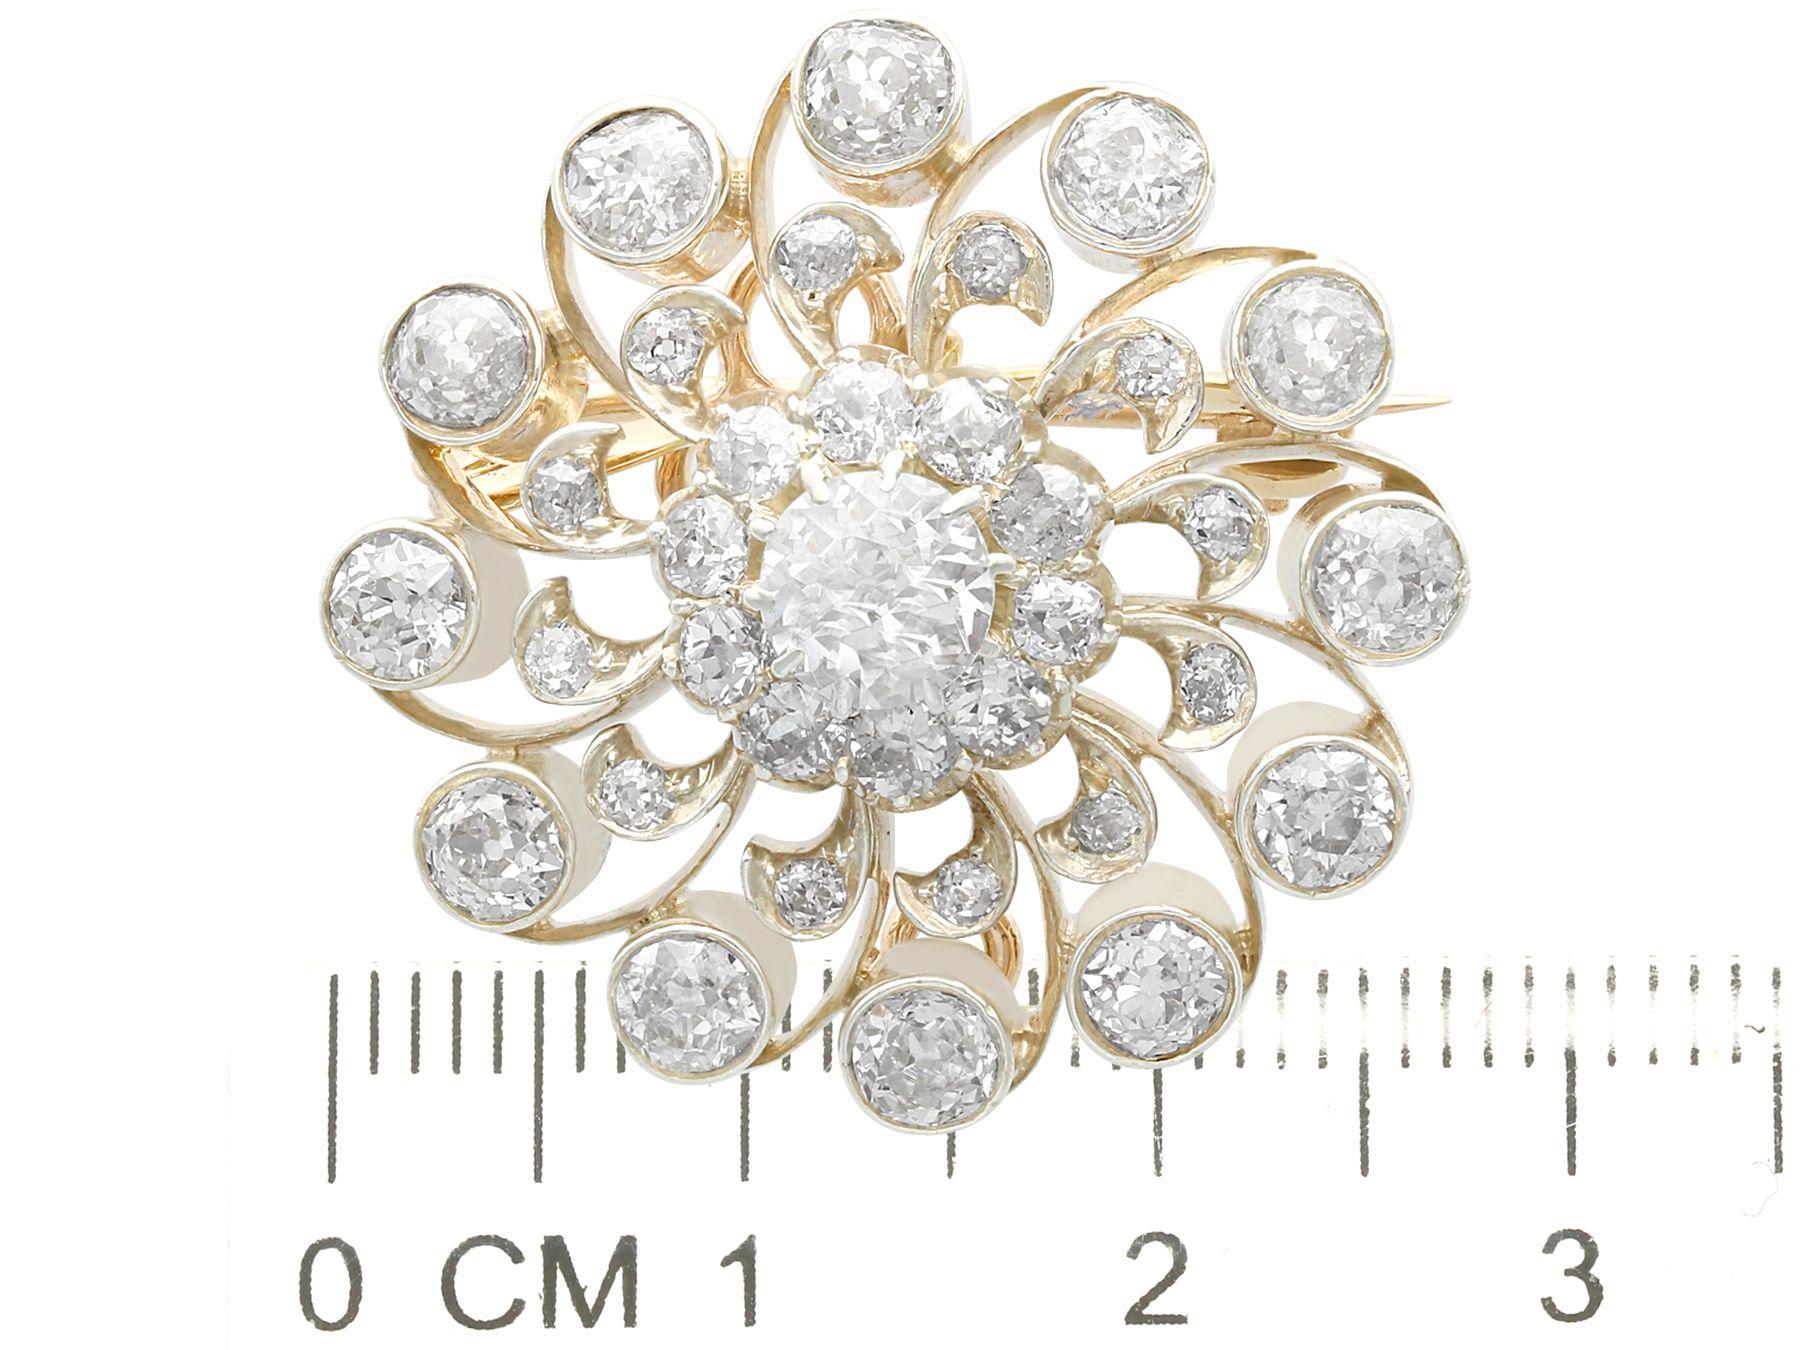 Antique 3.76 Carat Diamond and 9k Yellow Gold Brooch/Pendant circa 1880 1